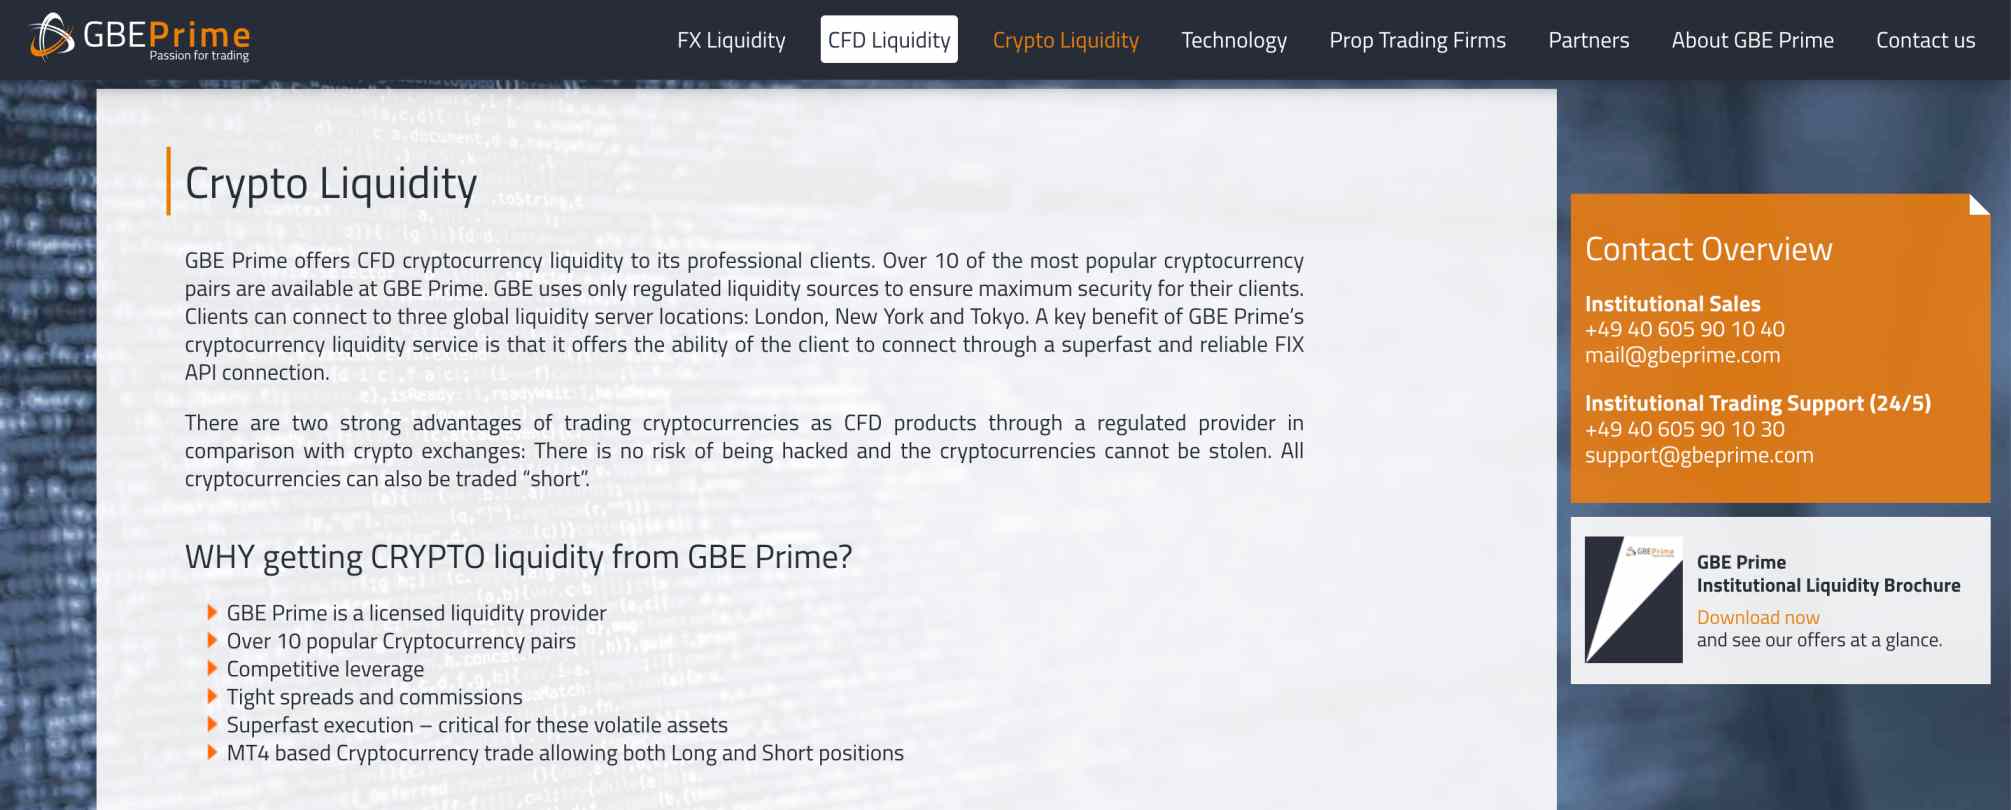 GBE Prime crypto liquidity